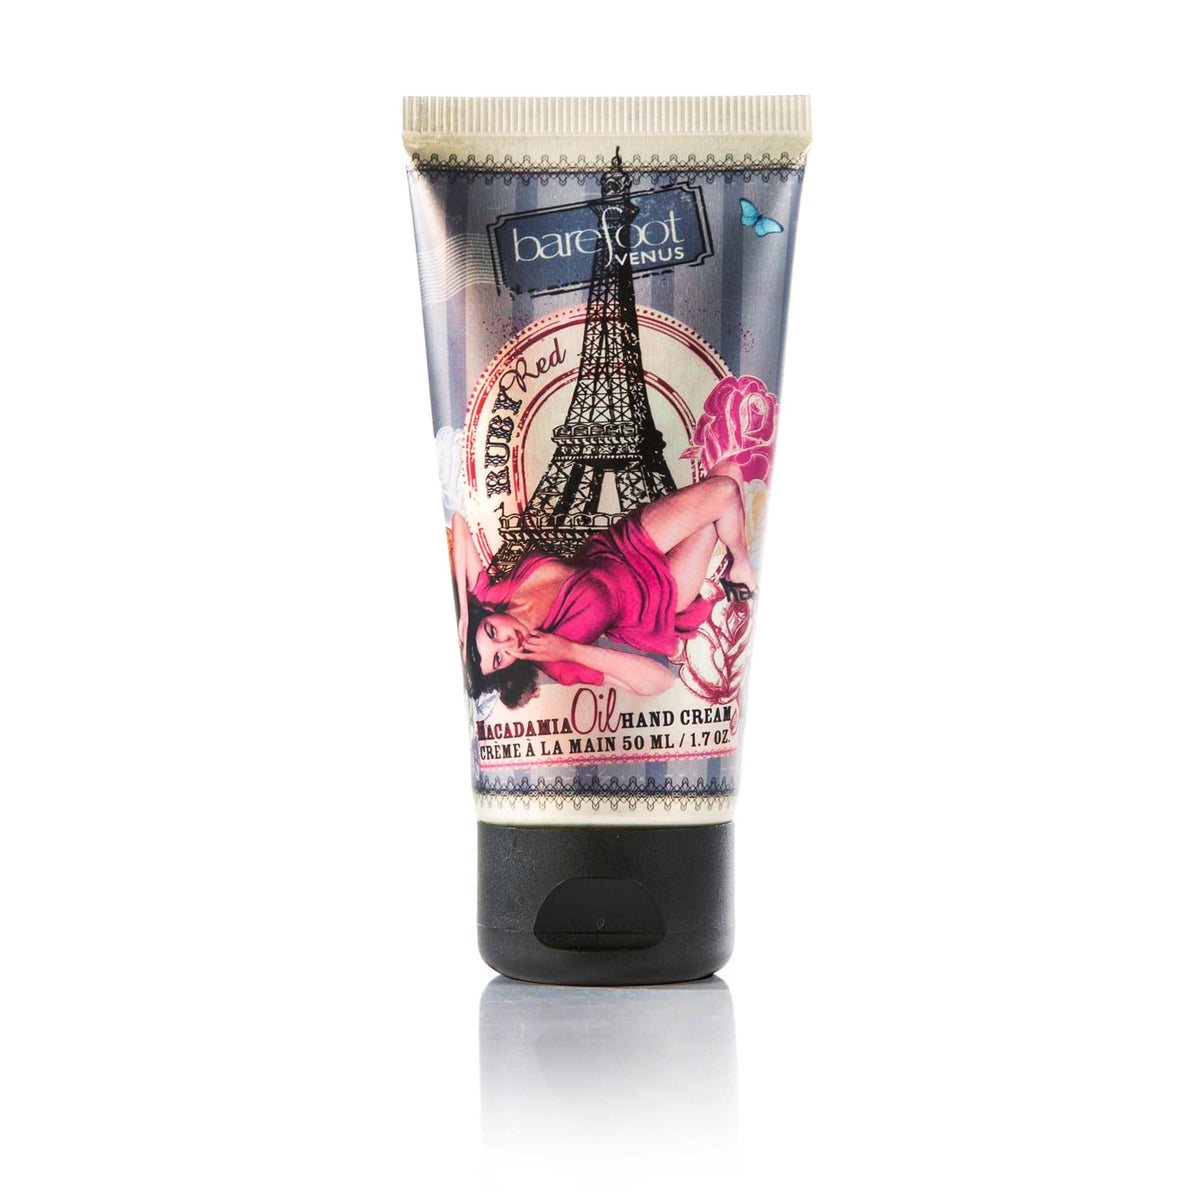 Purse-Size Hand Cream Select Your Sent MACADAMIA NUT MOISTURE RECOVERY. Barefoot Venus